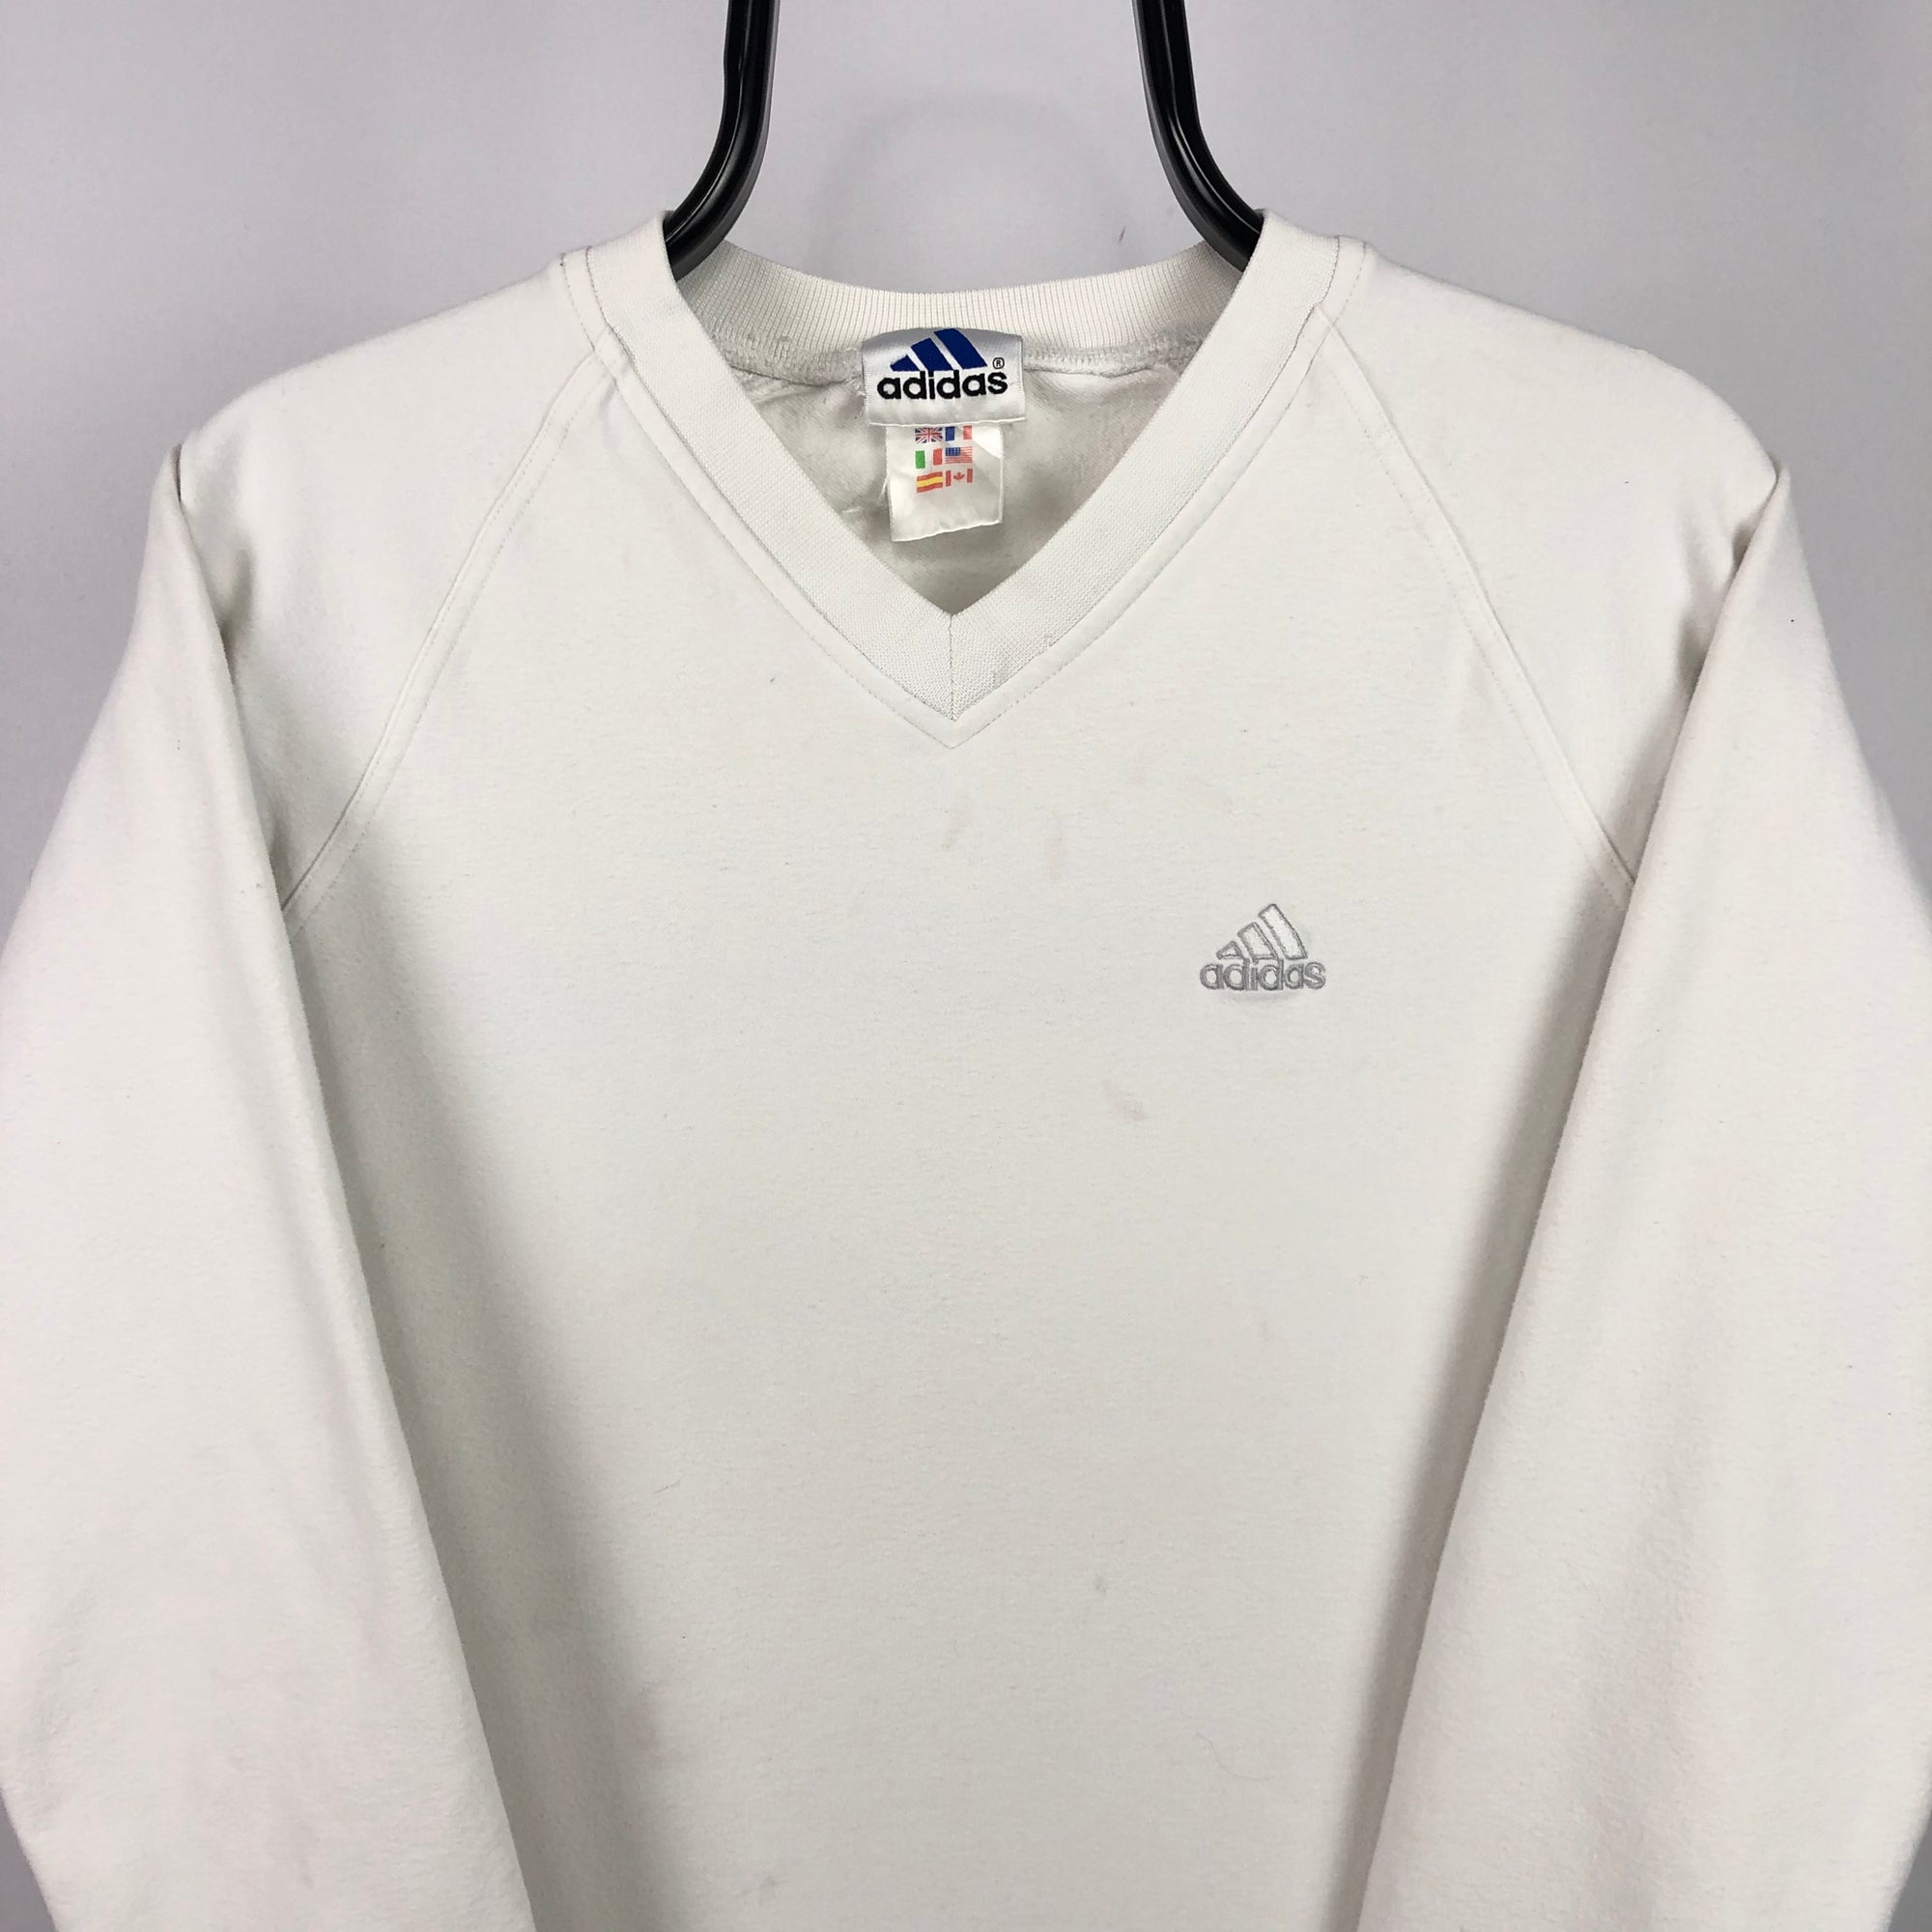 Vintage 90s Adidas Embroidered Small Logo Sweatshirt in White - Men's XXS/Women's XS